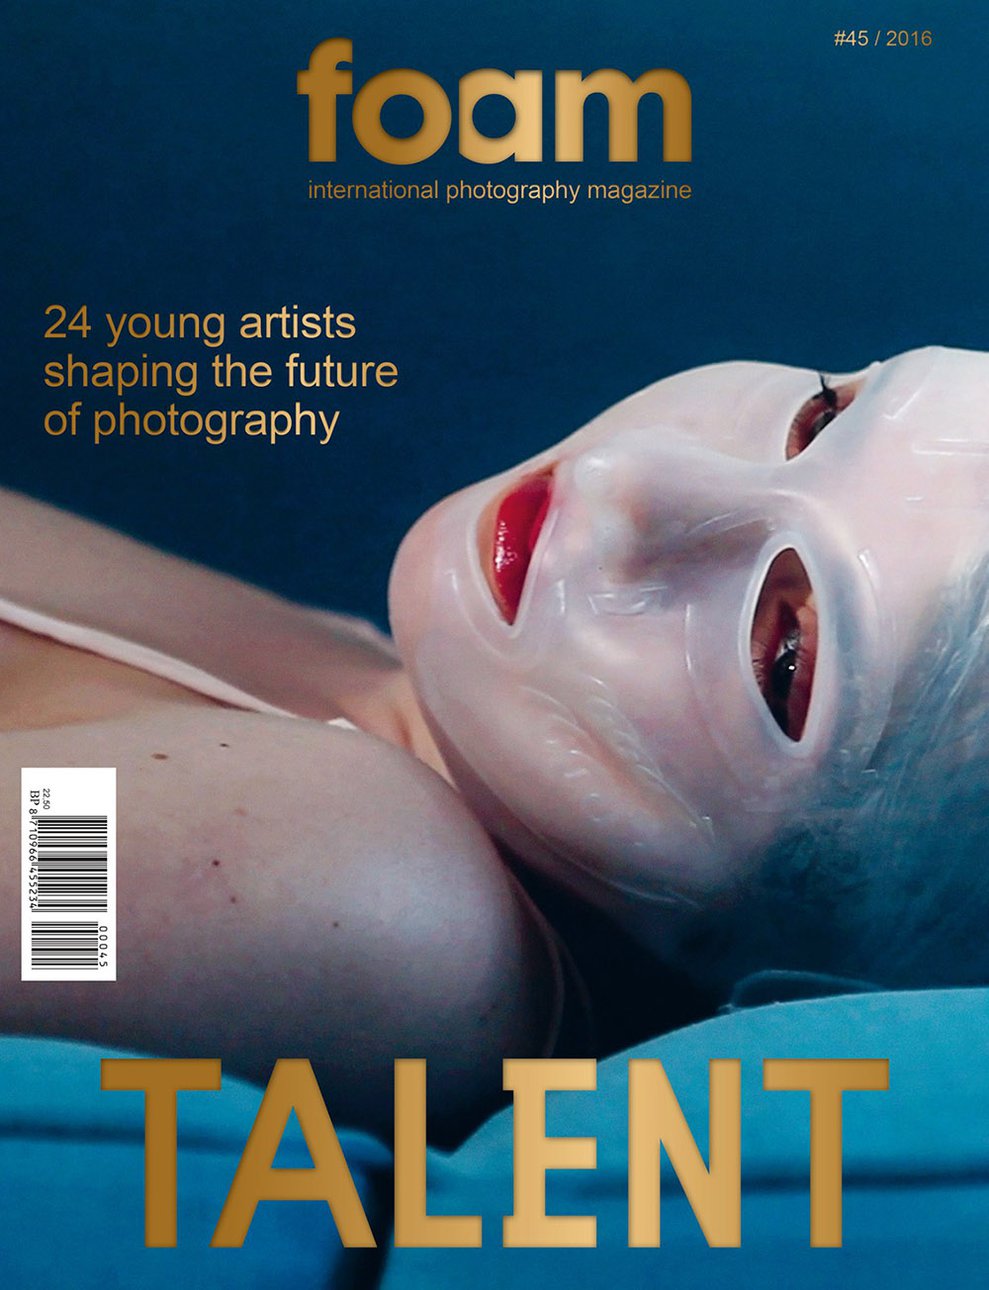 FOAM magazine cover